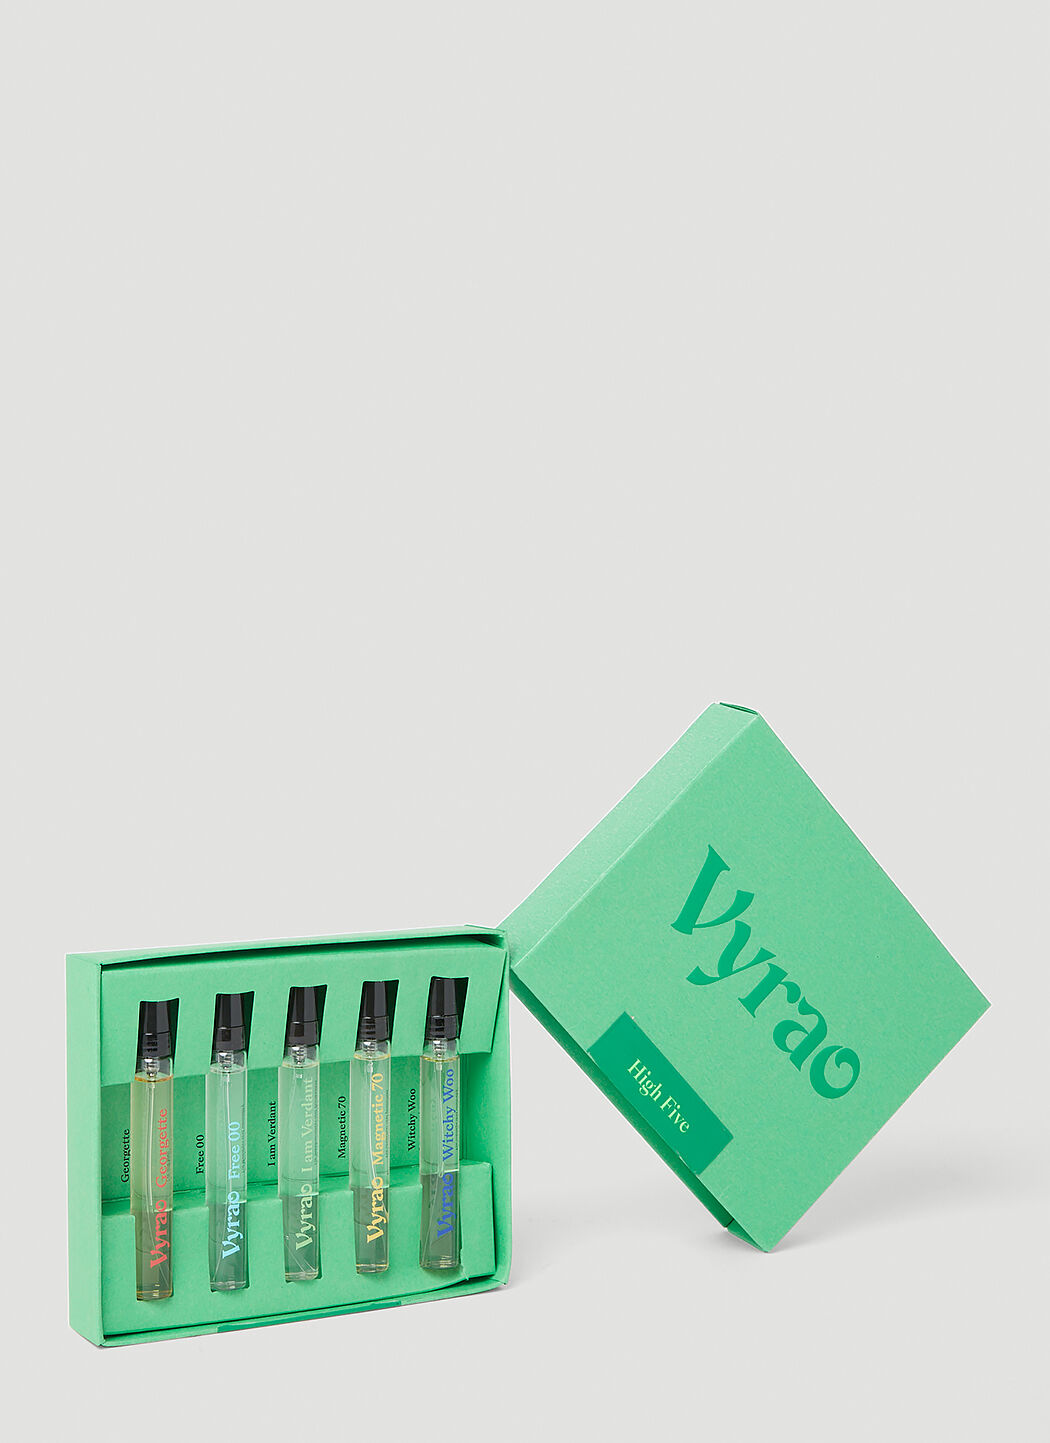 Vyrao ハイヴァイブ トラベル香水 5本セット クリア vyr0353002